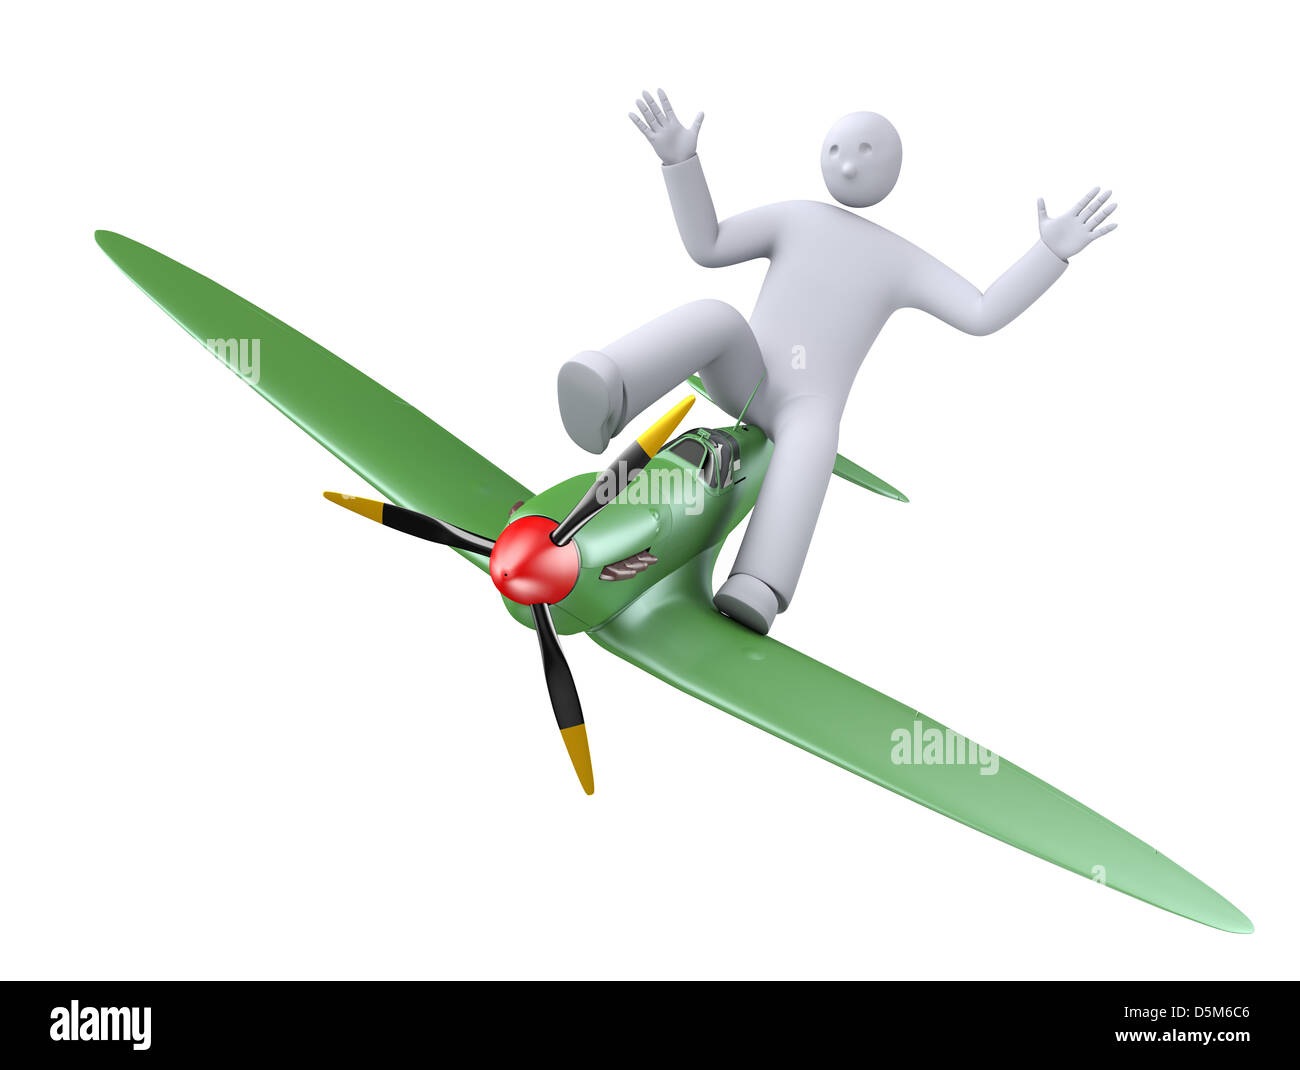 Cartoon plane and funny test pilot Stock Photo